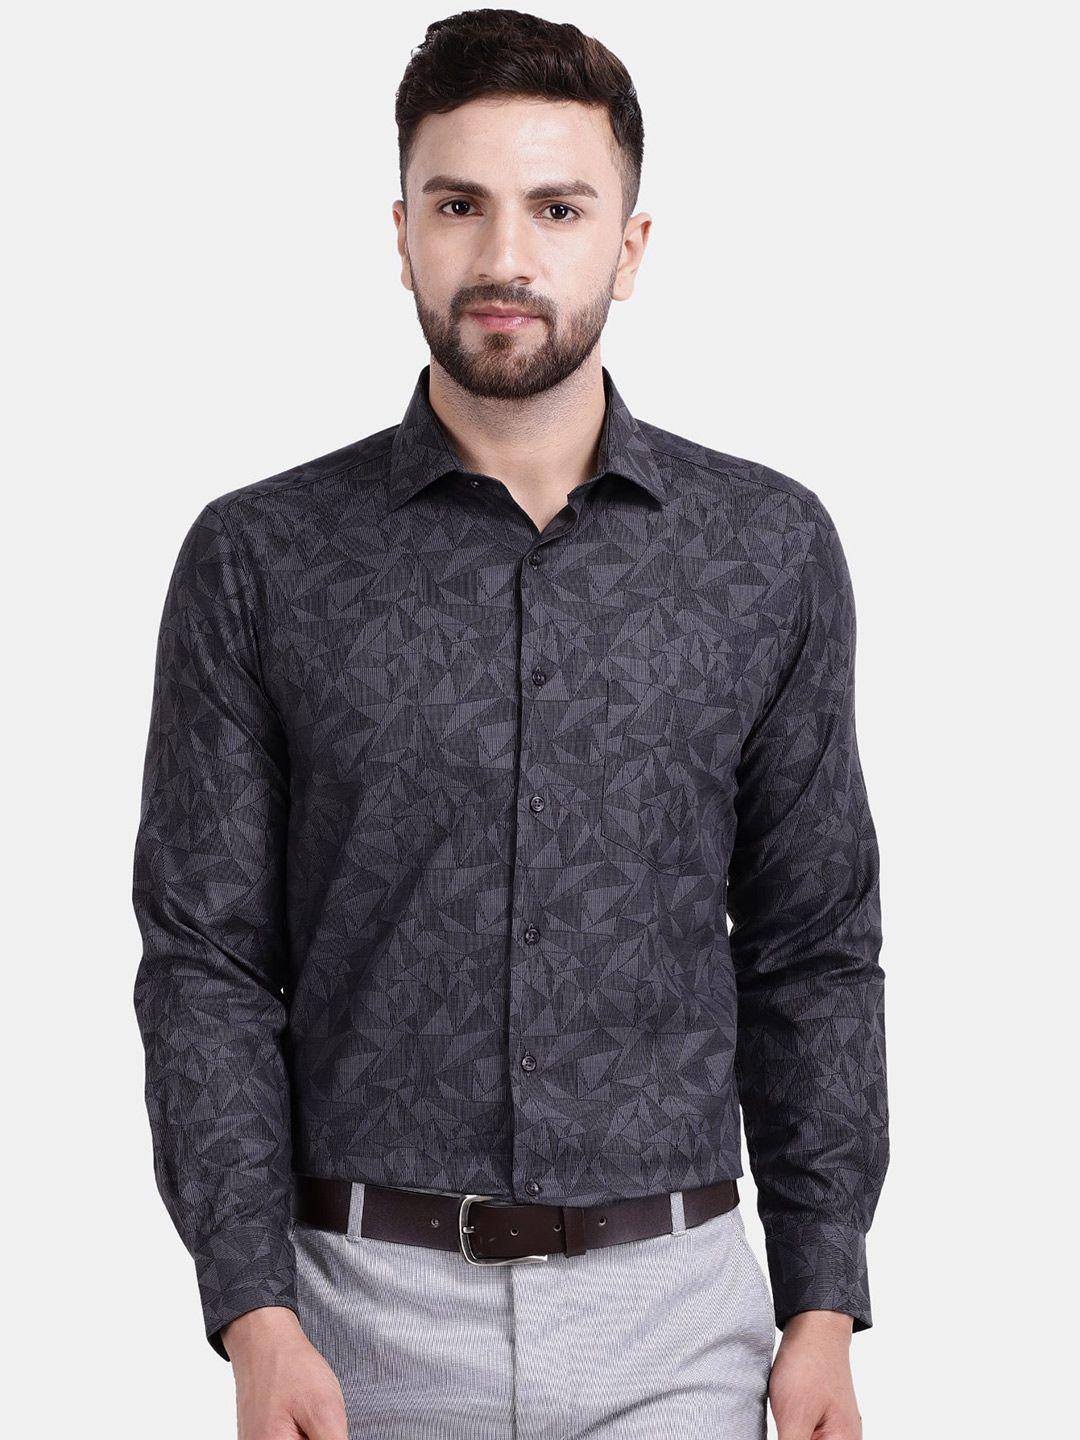 cotstyle premium geometric printed cotton formal shirt